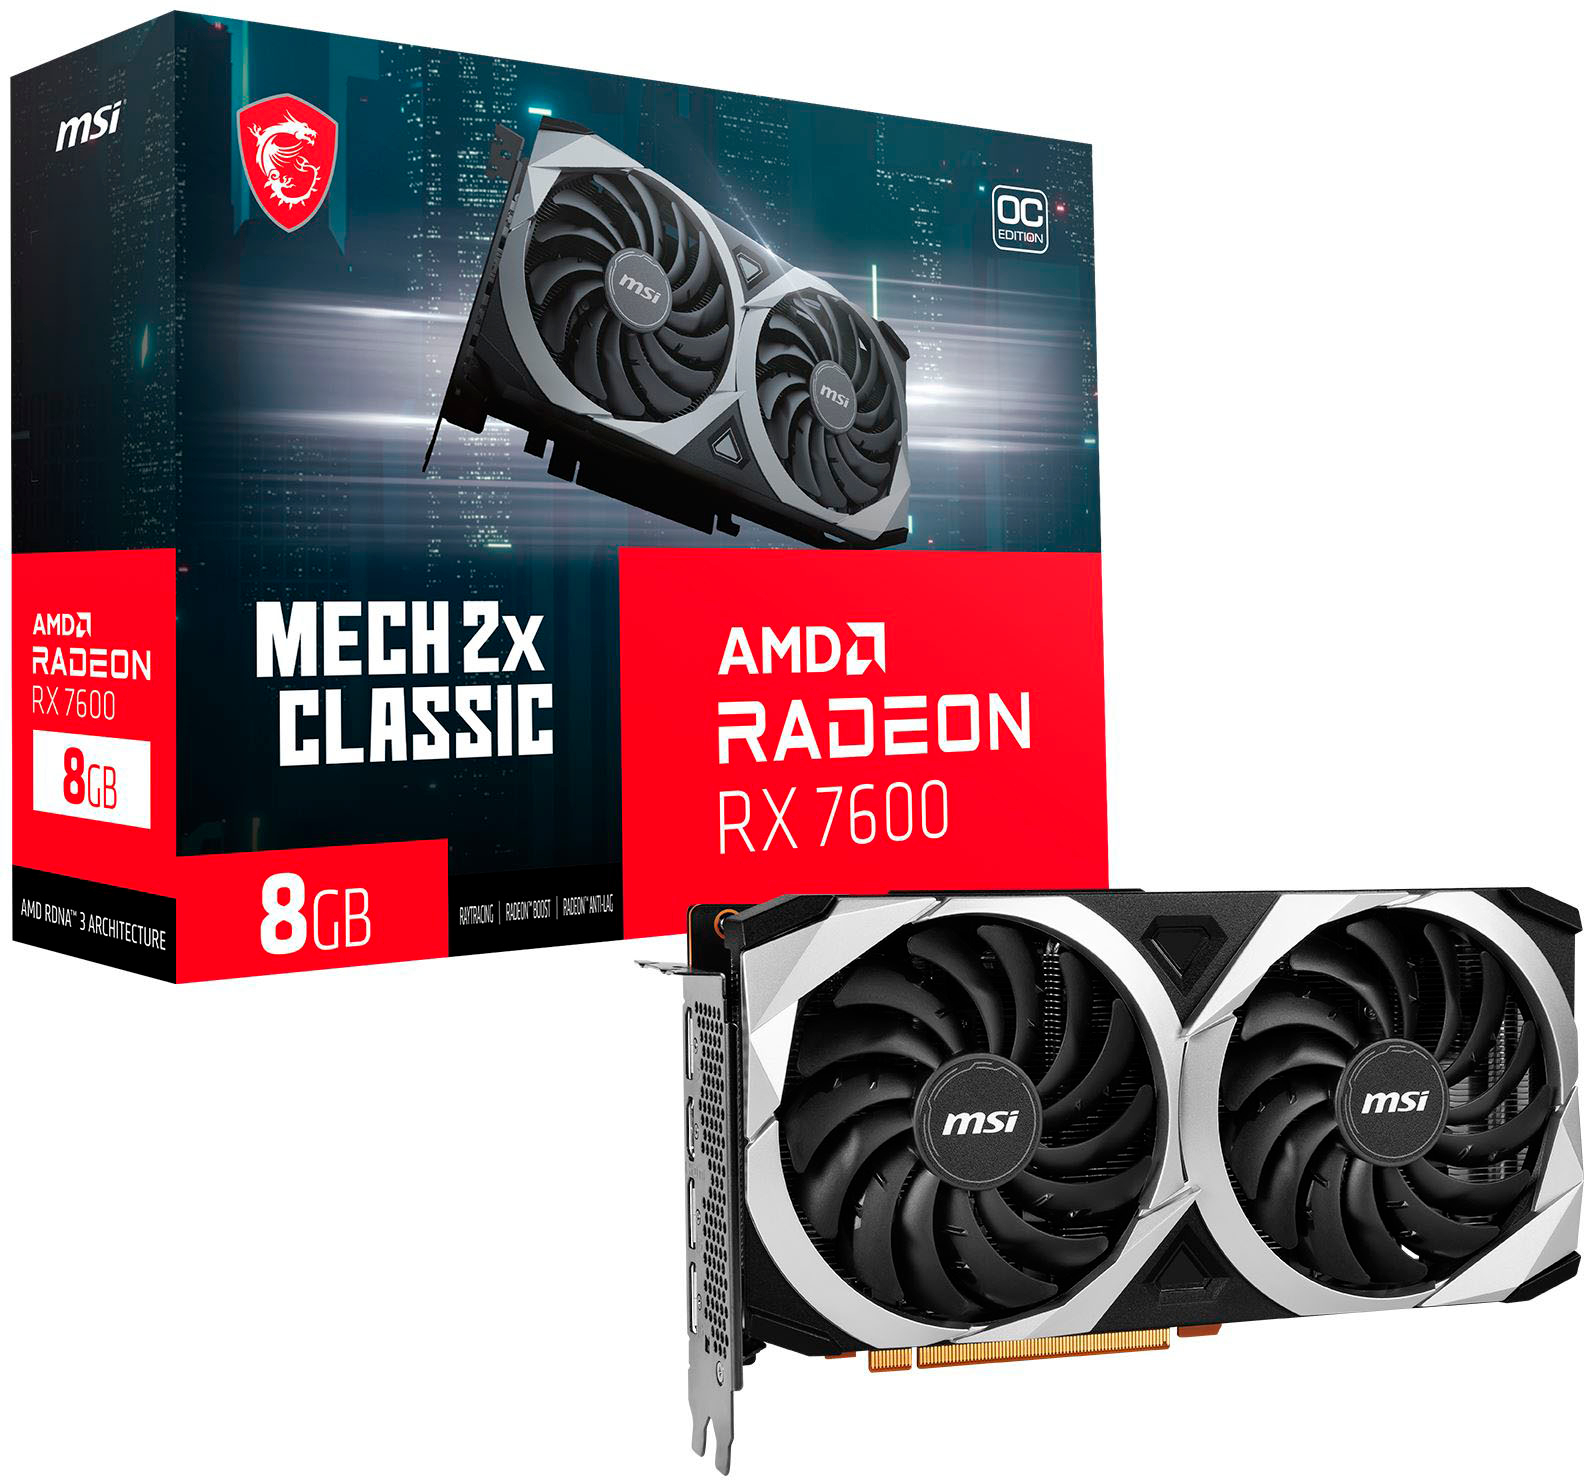 AMD Radeon RX 6650XT 8GB GDDR6 Video graphic card cheap - Price of $271.40